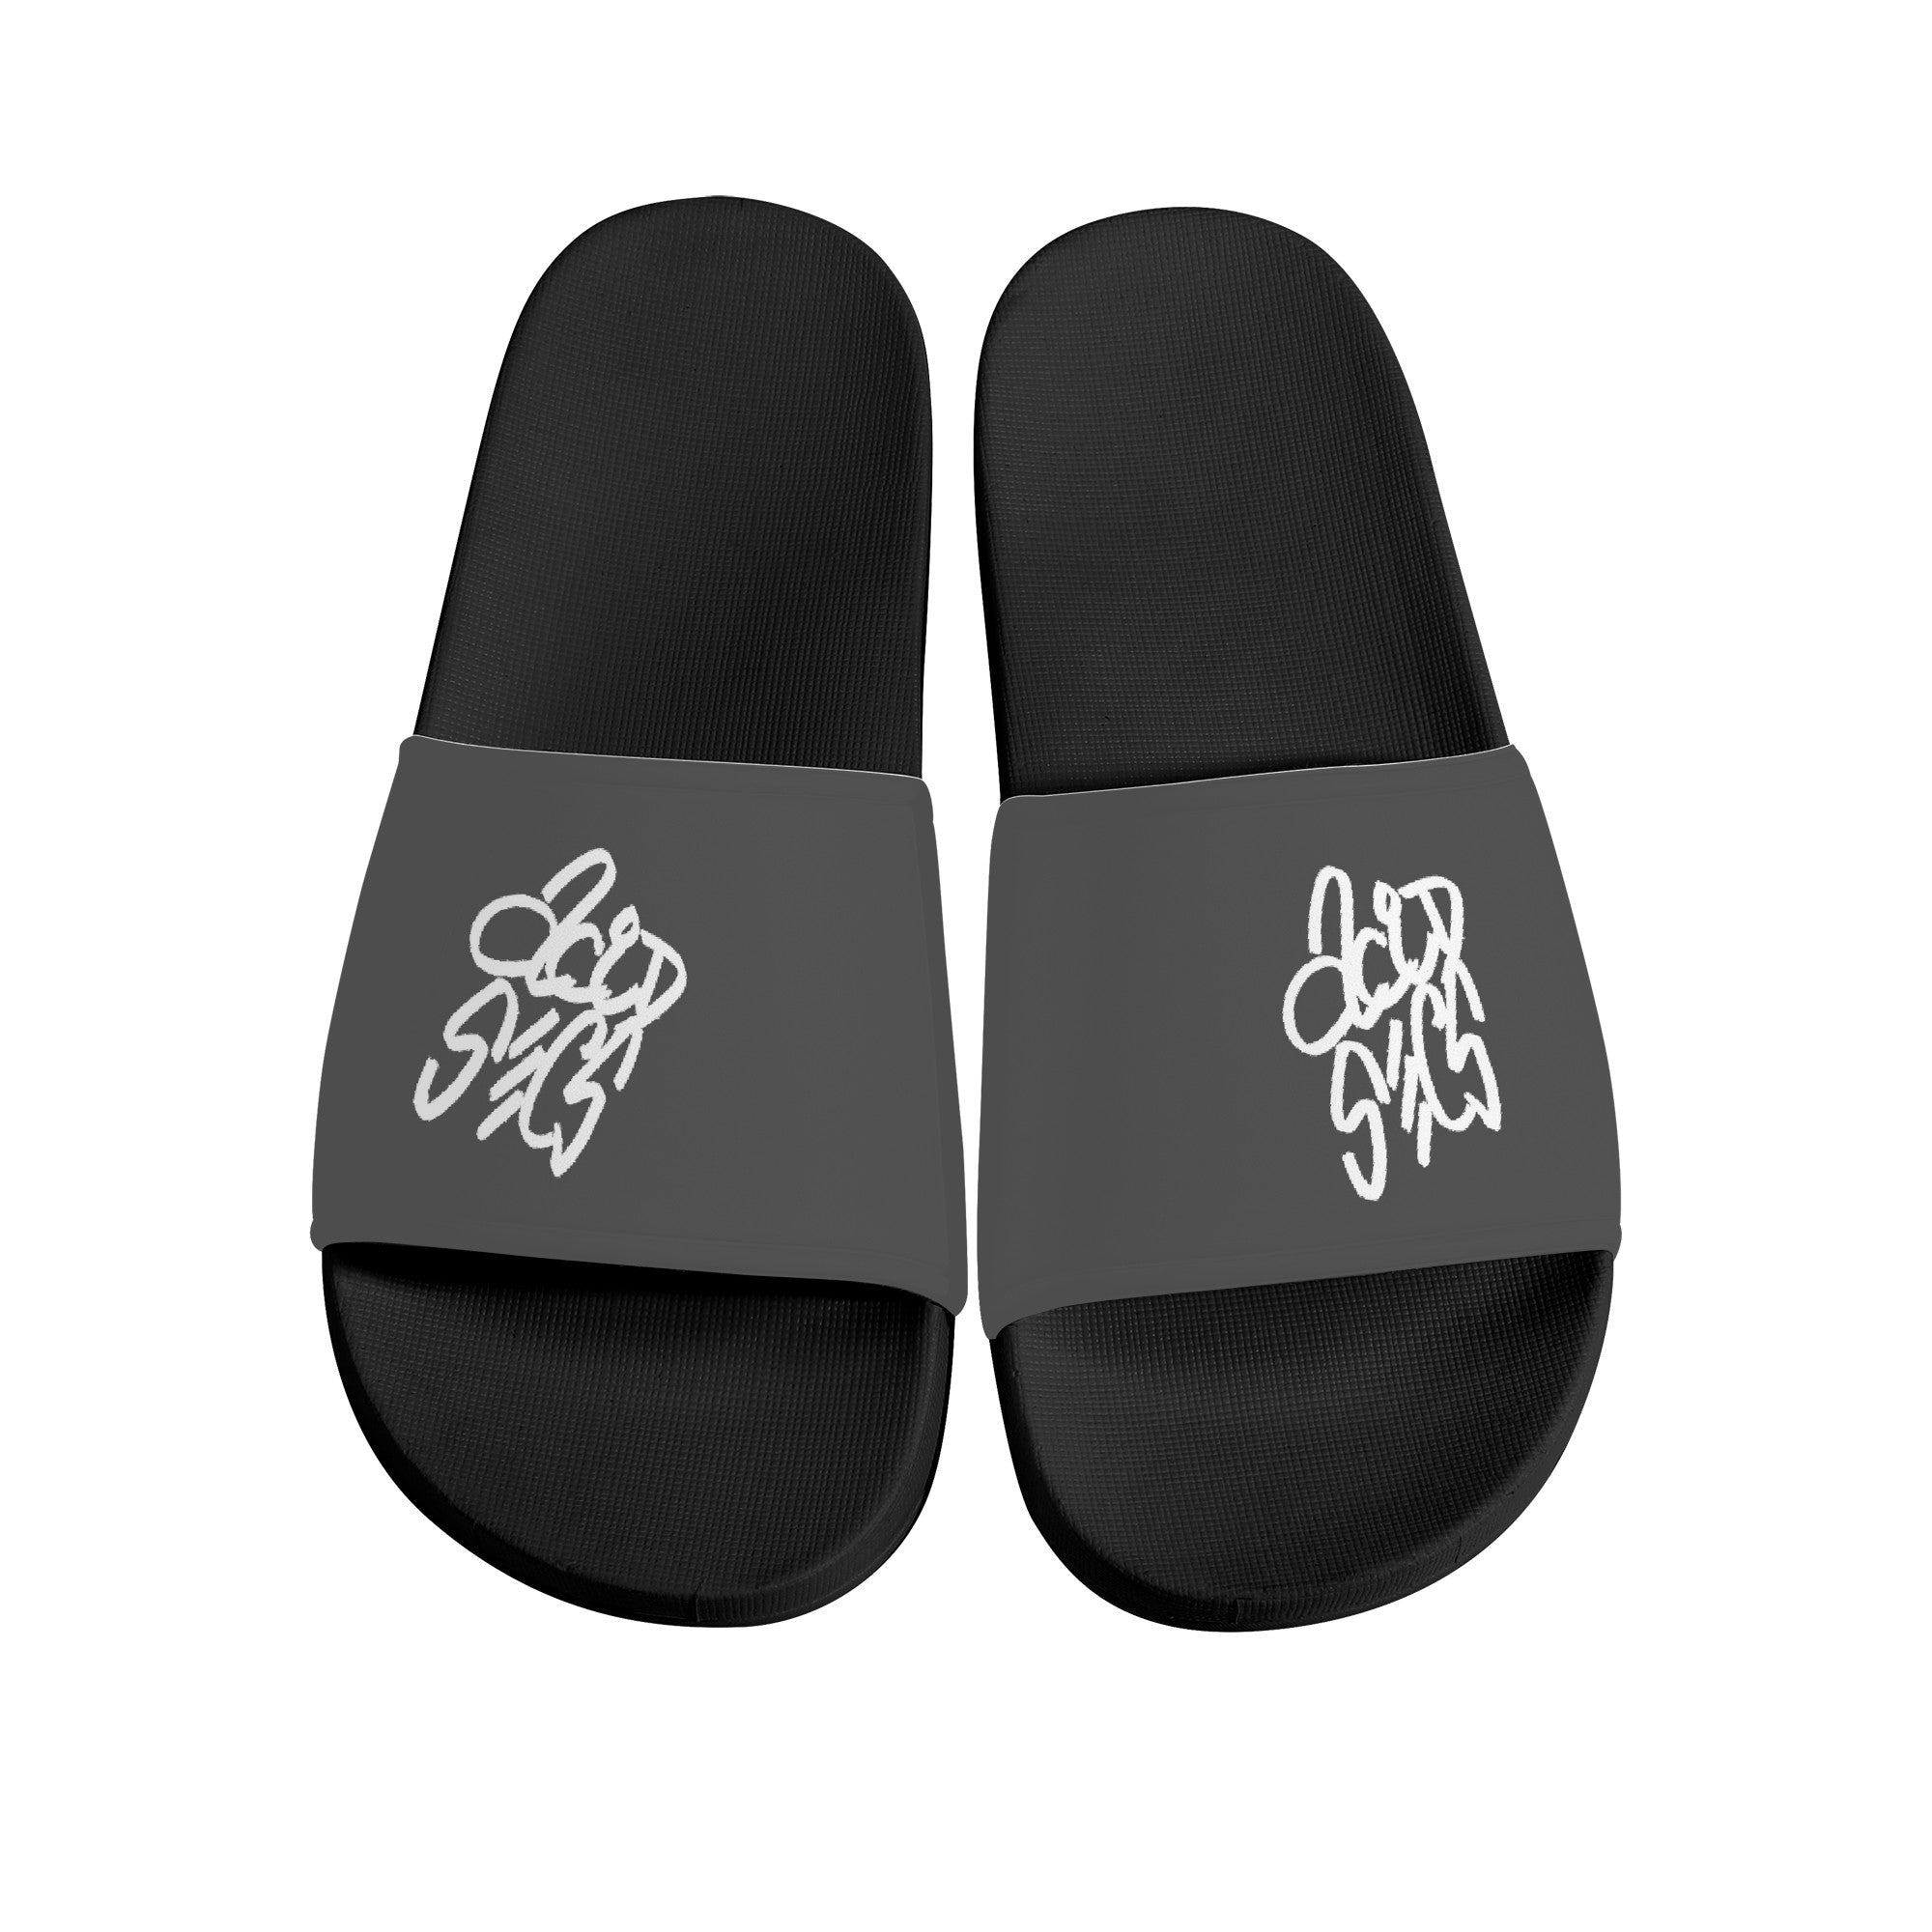 Acid Secs Slide Sandals - Dark Grey